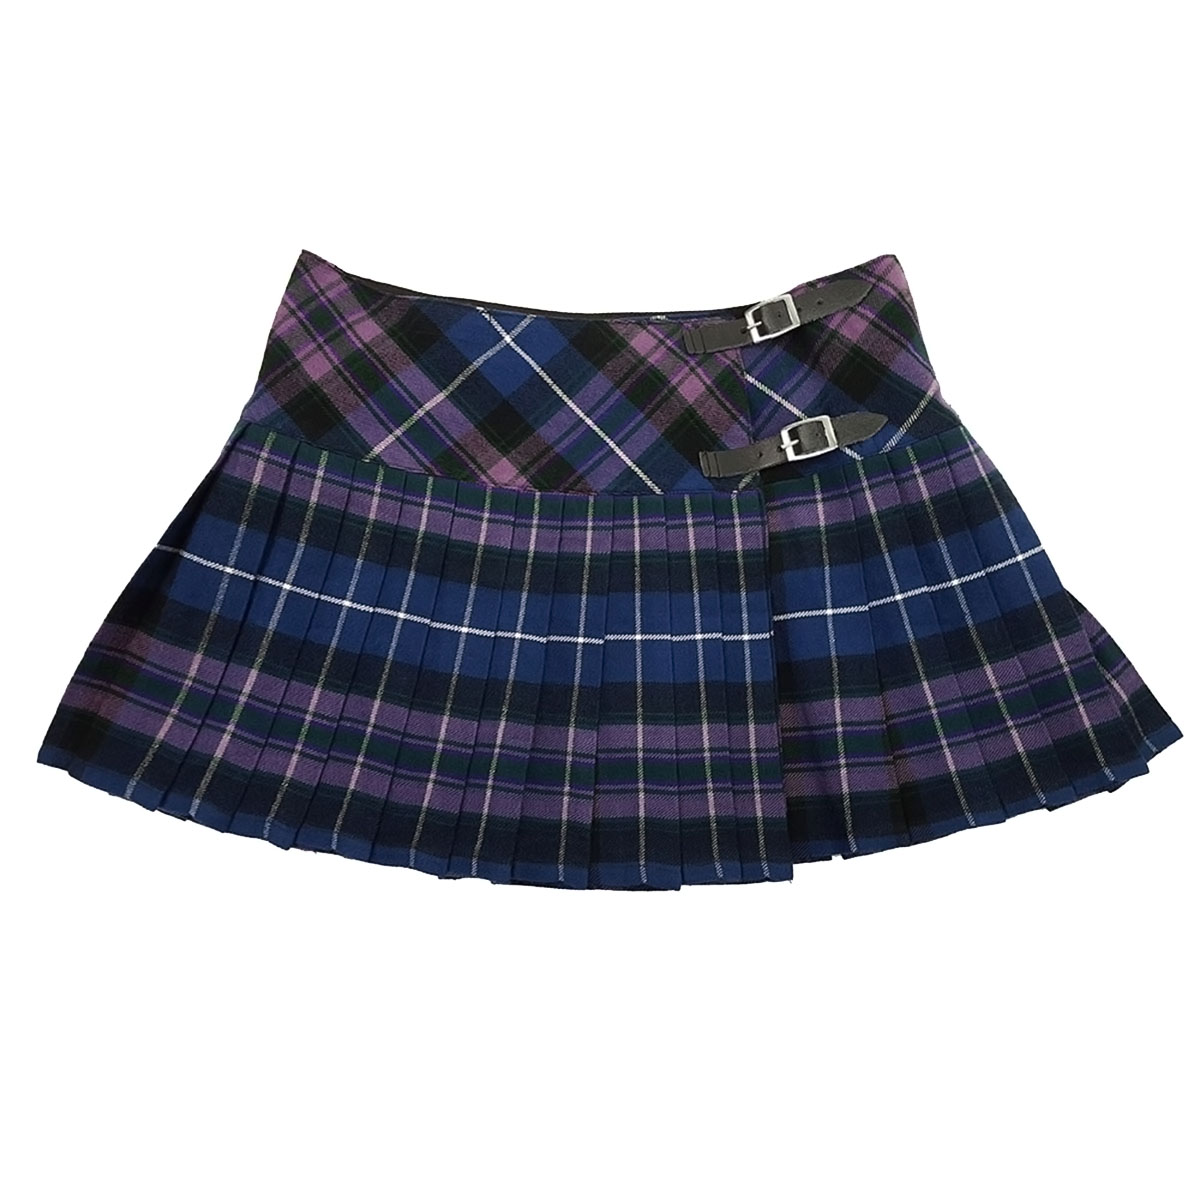 Pride of Scotland Tartan Homespun Kilted Mini Skirt 30W 14L